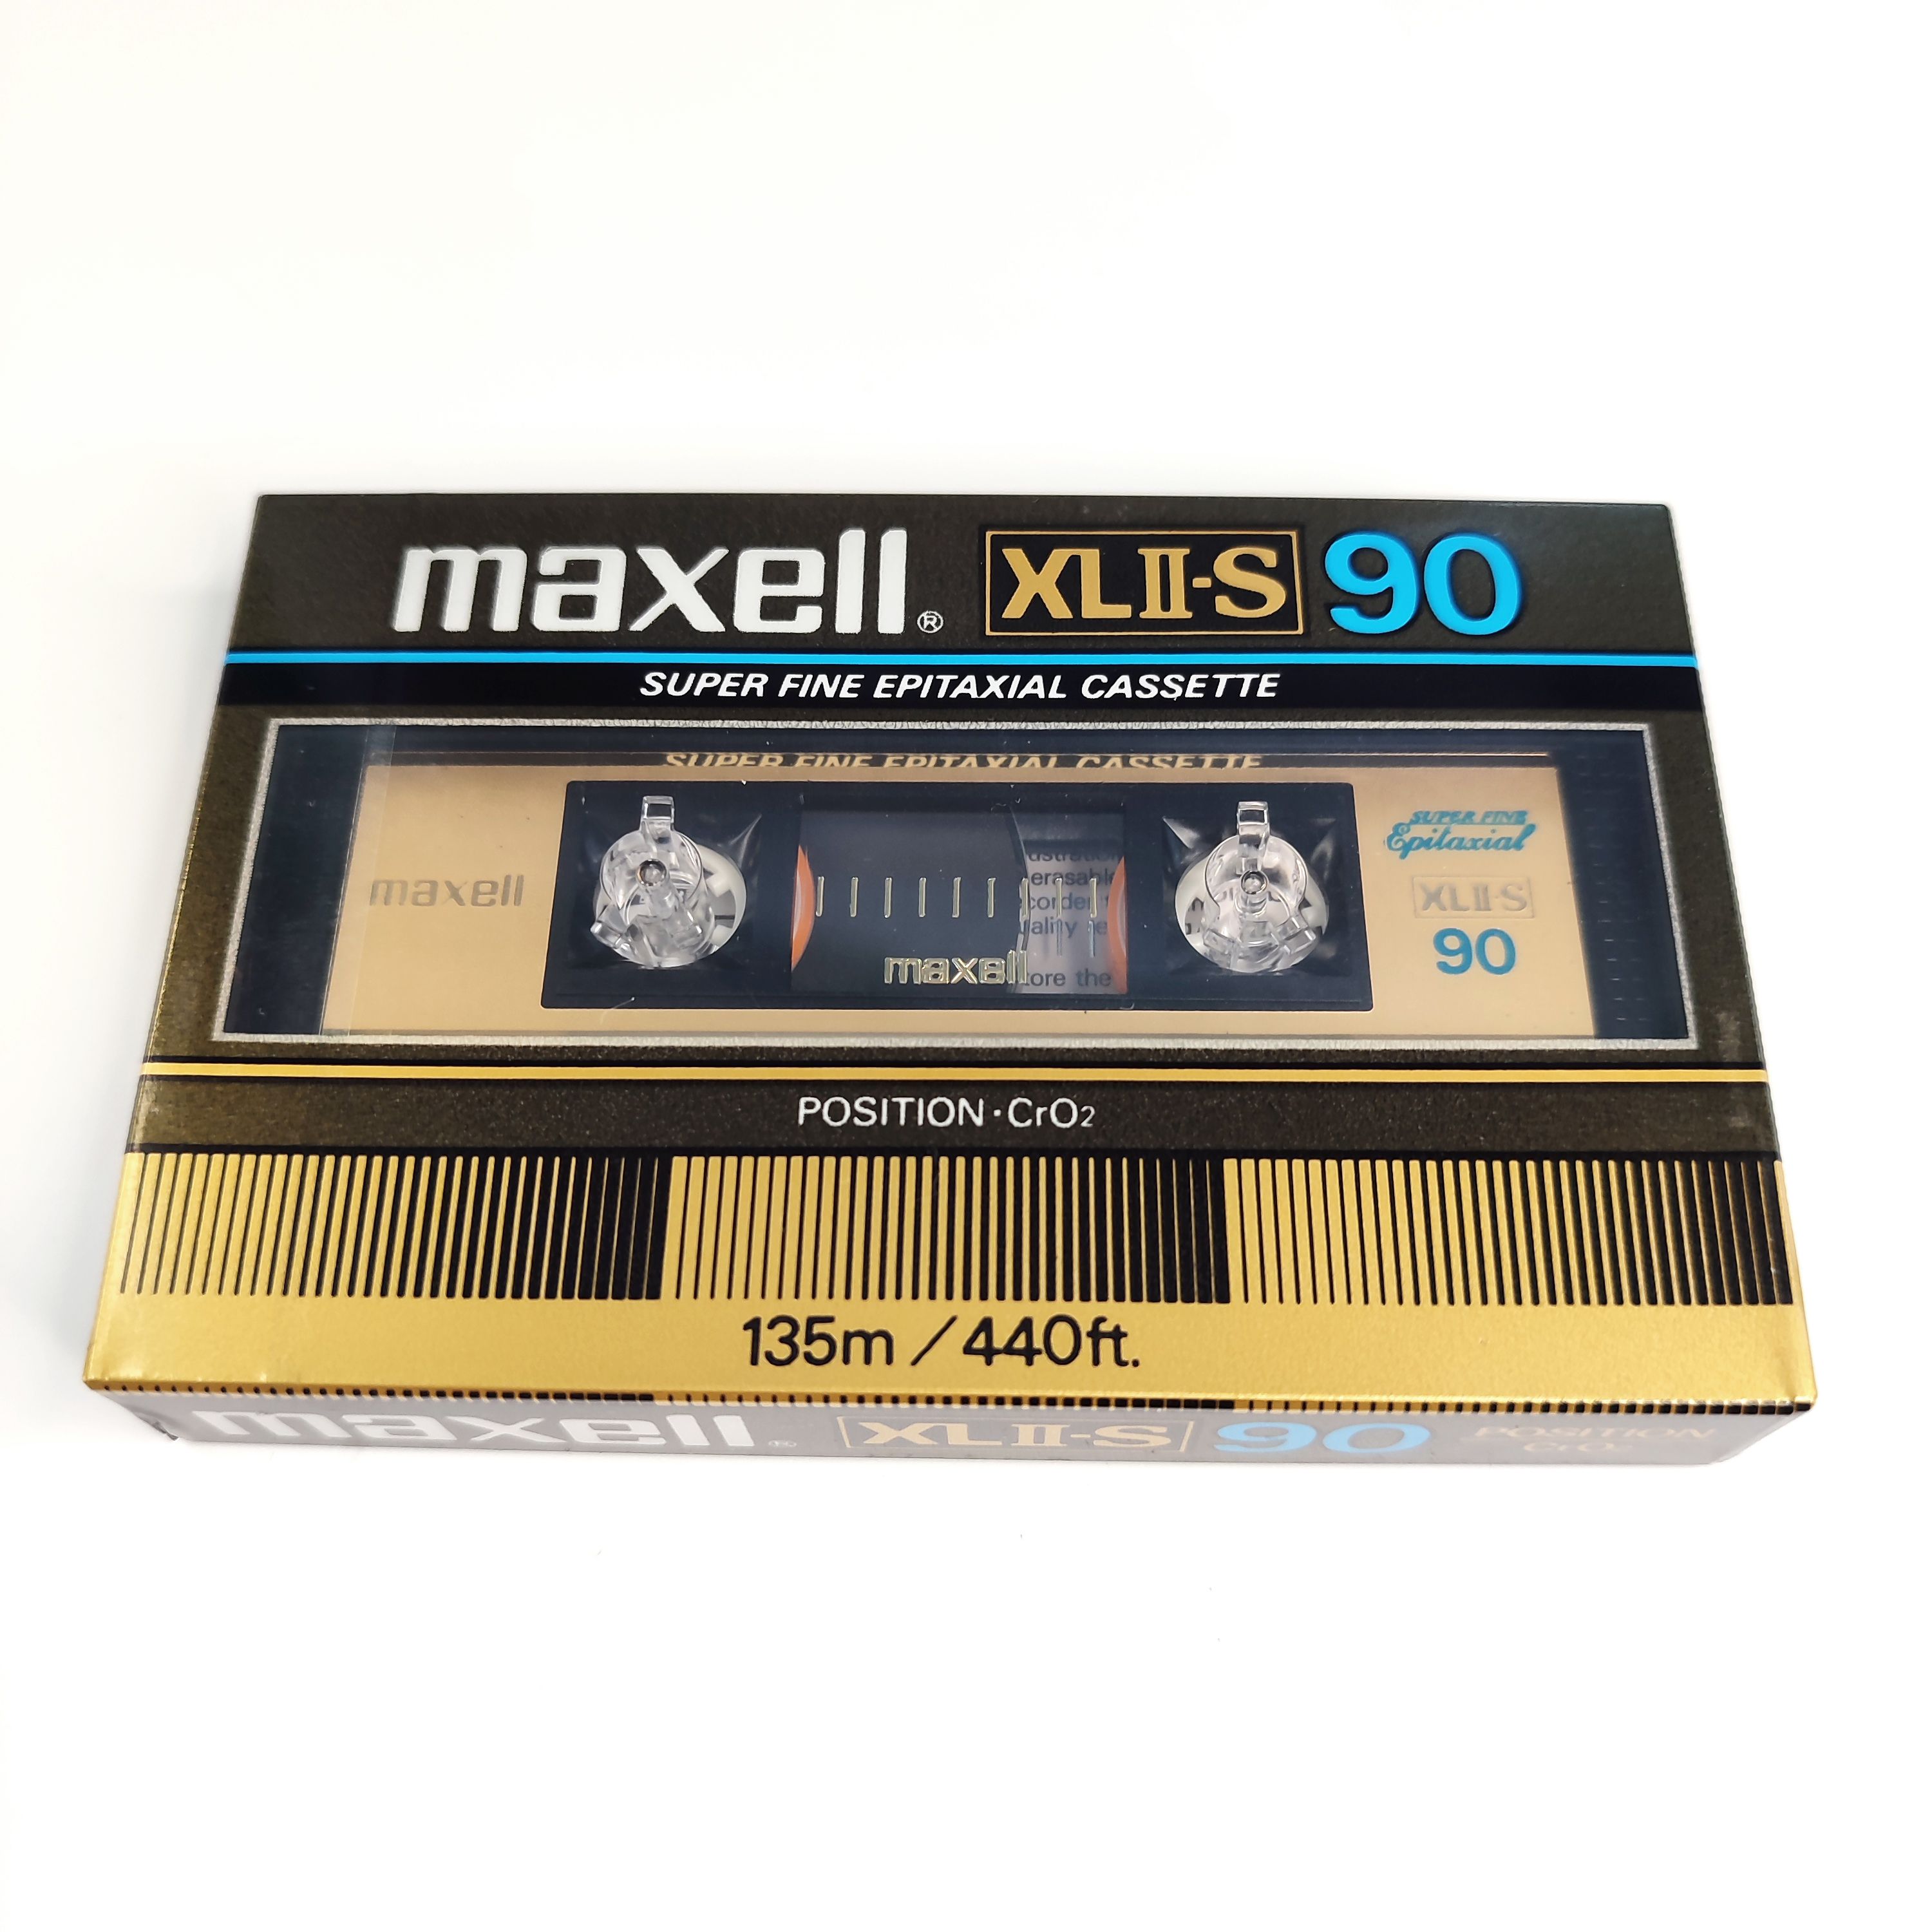 MaxellАудиокассетадлязаписиXLII-S90ChromeЯпония,110мин